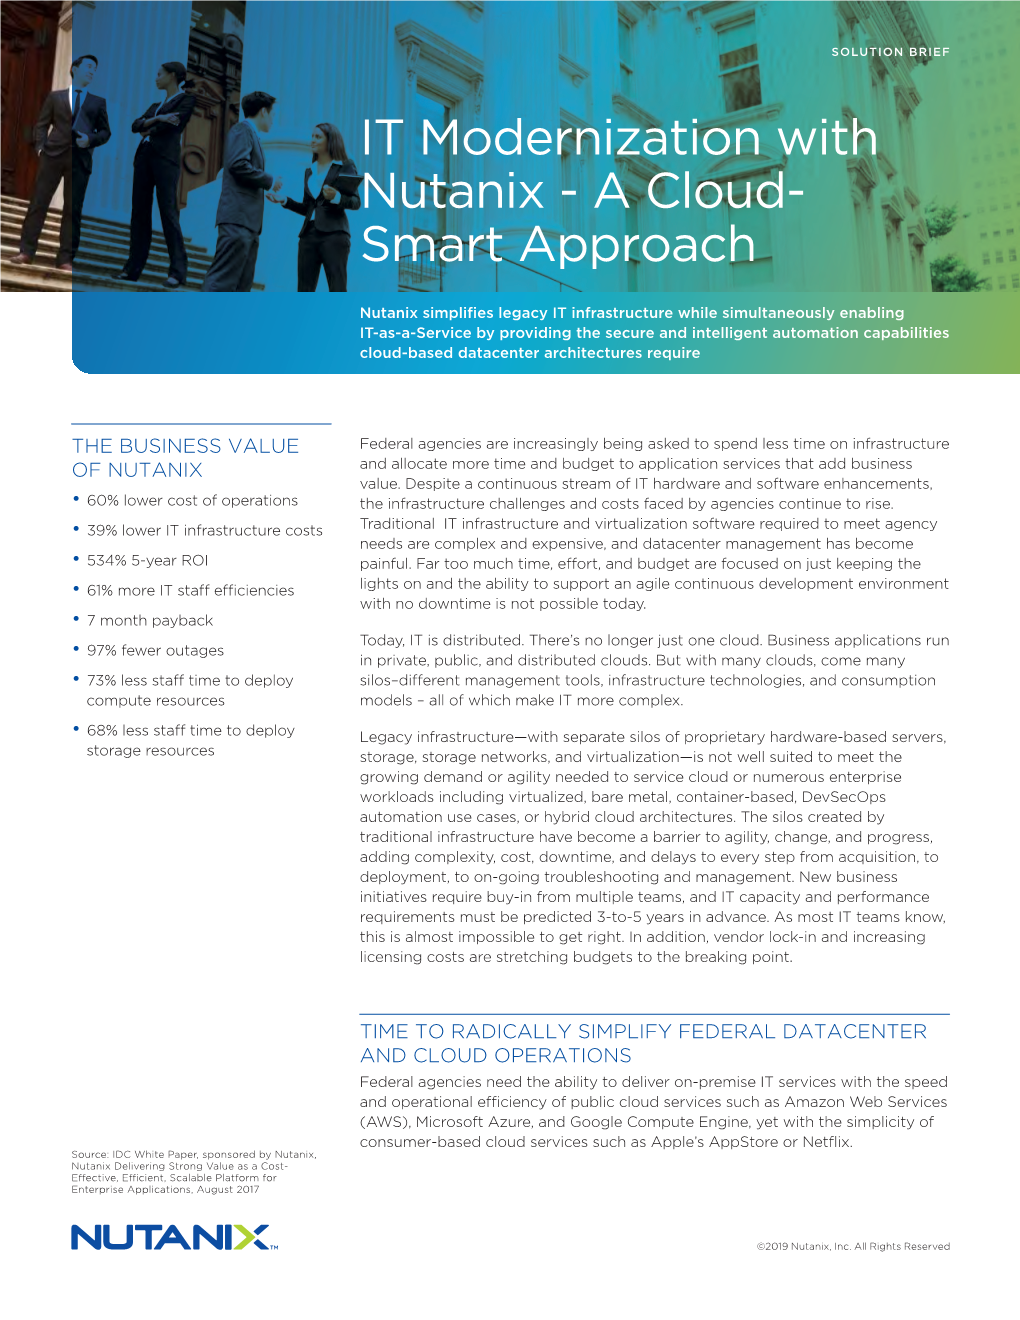 IT Modernization with Nutanix – a Cloud-Smart Approach